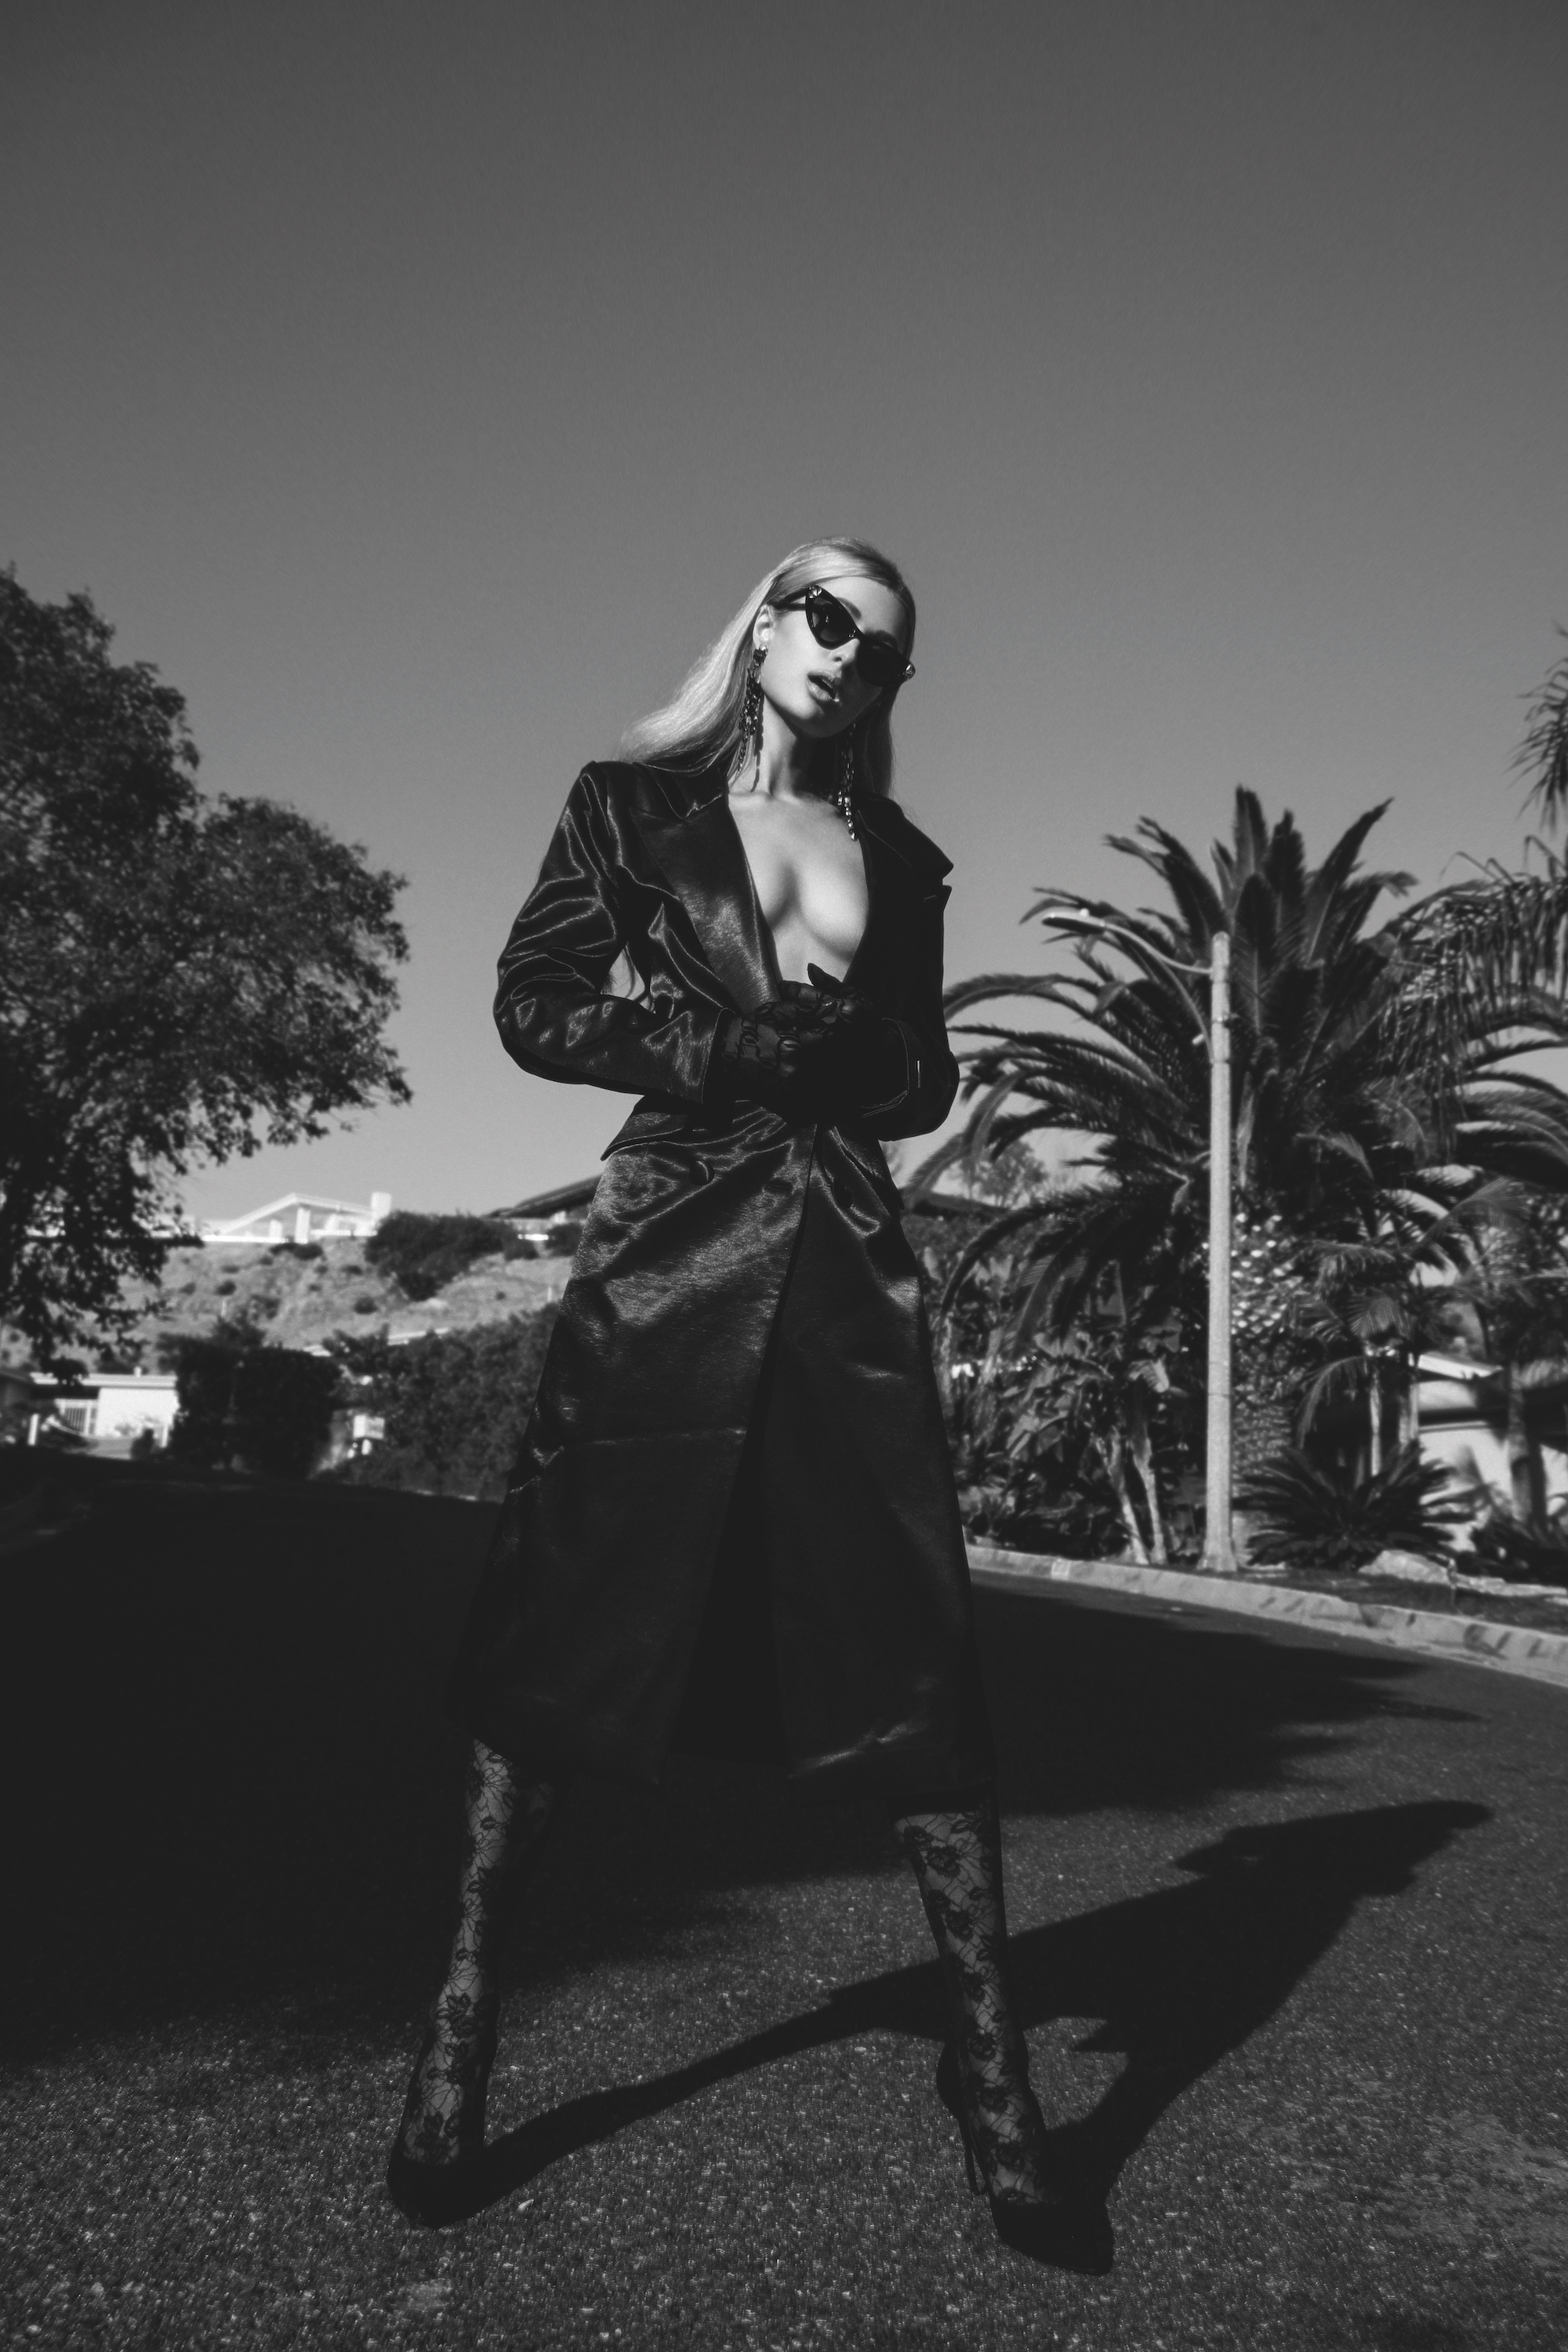 Paris Hilton Reozing Sex Appeal en New Shoot! - Photo 4